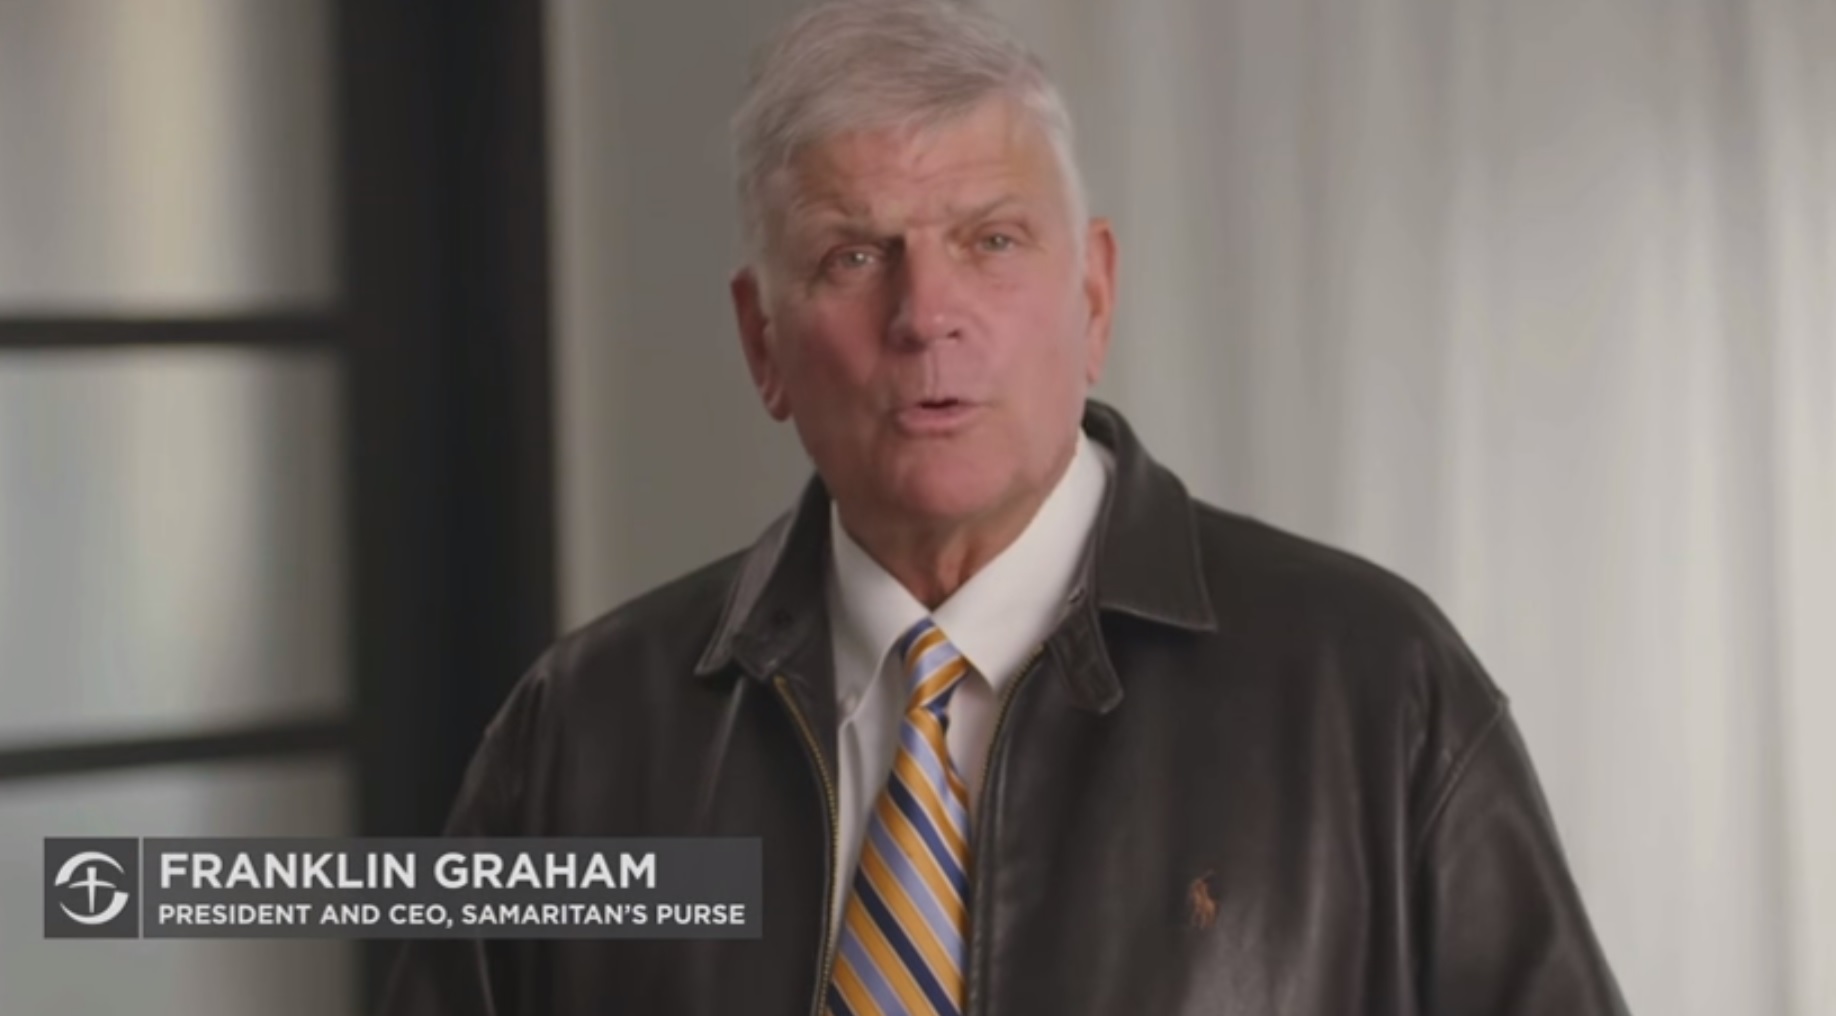 Anti-LGBT preacher Franklin Graham of Samaritan's Purse